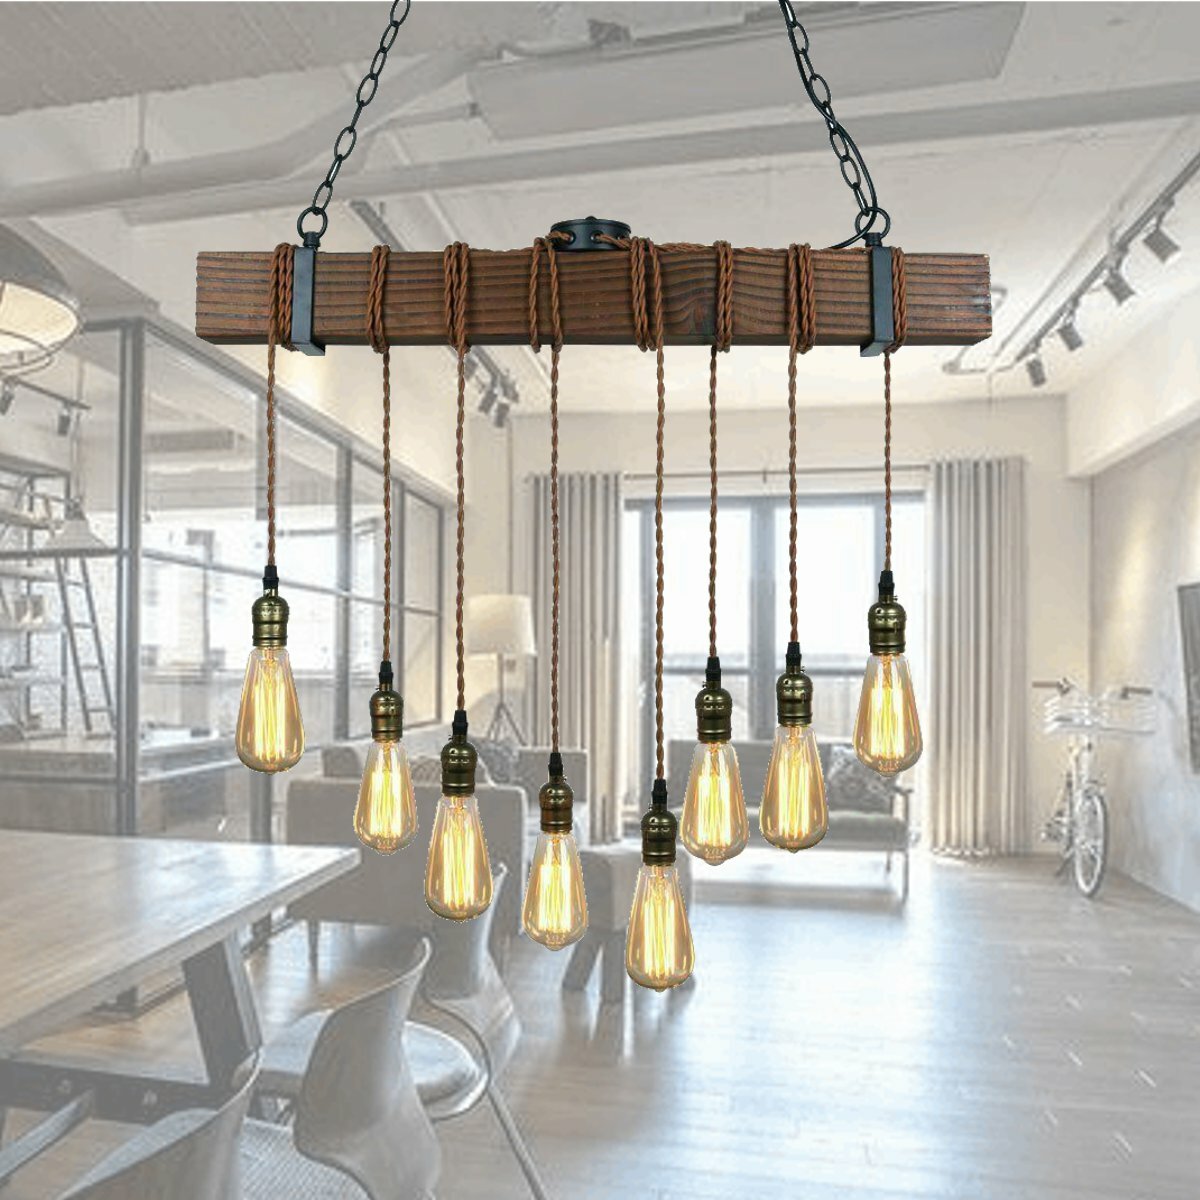 E26 Industrial Wood Pendant Light Hanging Ceiling Lamp Vintage Rustic Chandelier